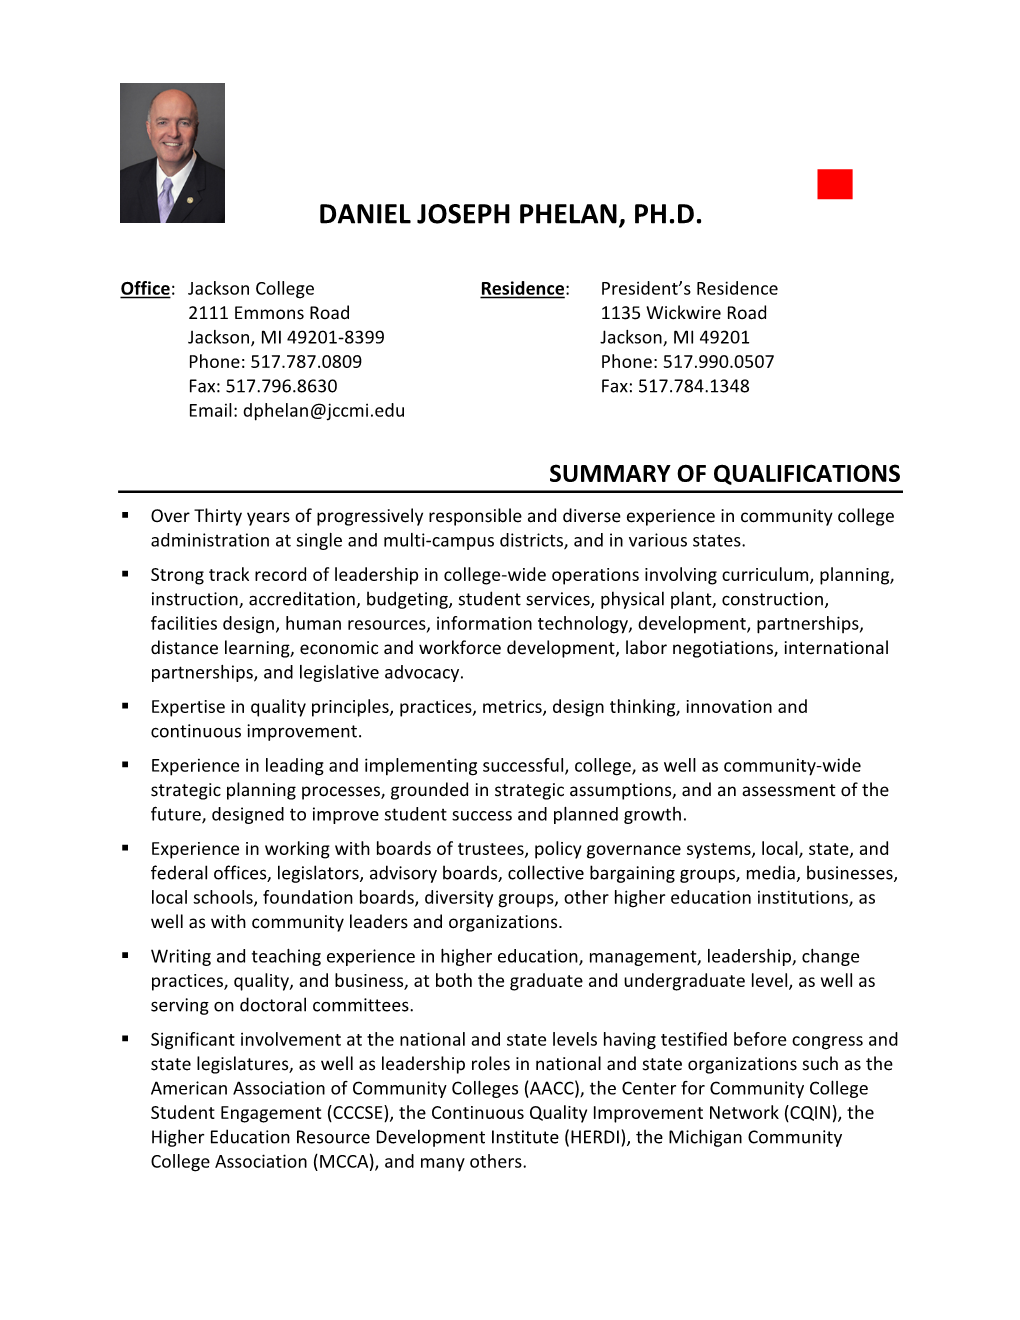 Daniel Joseph Phelan, Ph.D